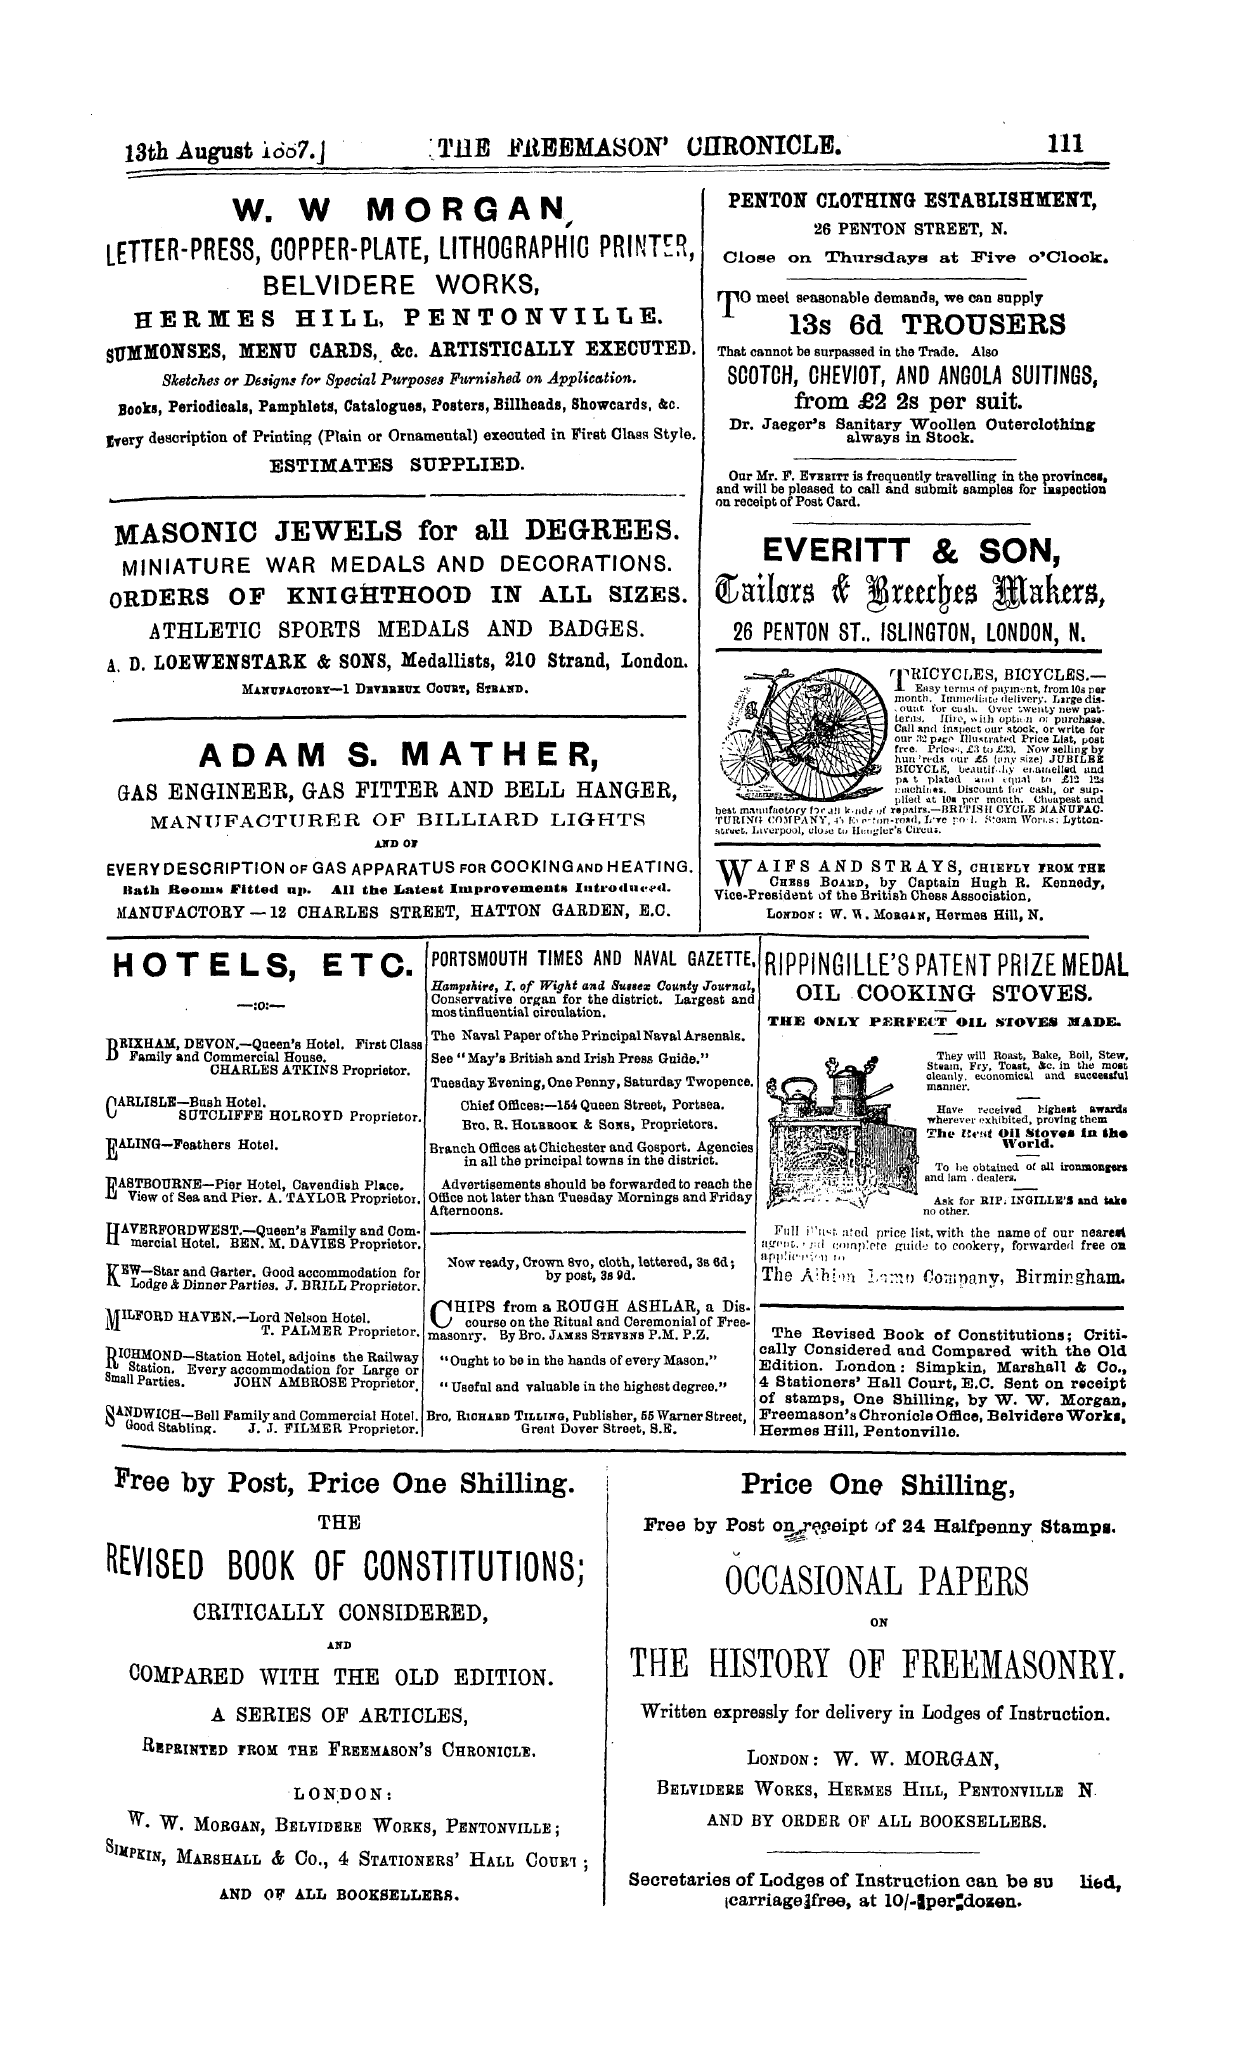 The Freemason's Chronicle: 1887-08-13 - Ad01505